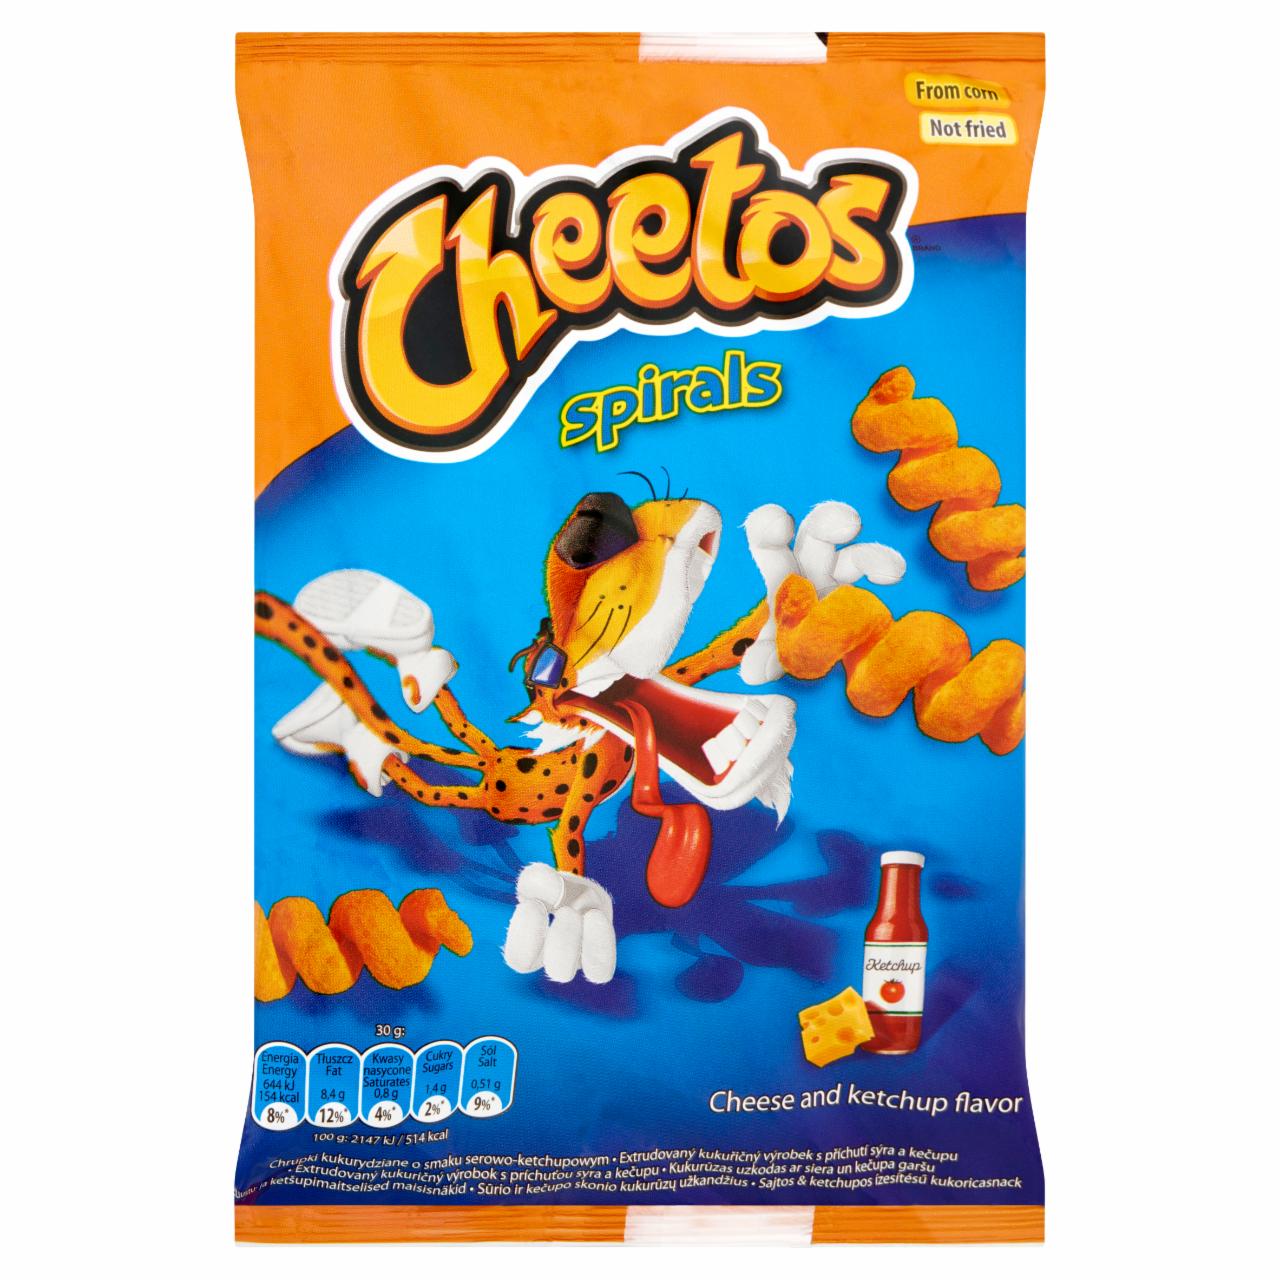 Képek - Cheetos Spirals sajtos & ketchupos ízesítésű kukoricasnack 30 g